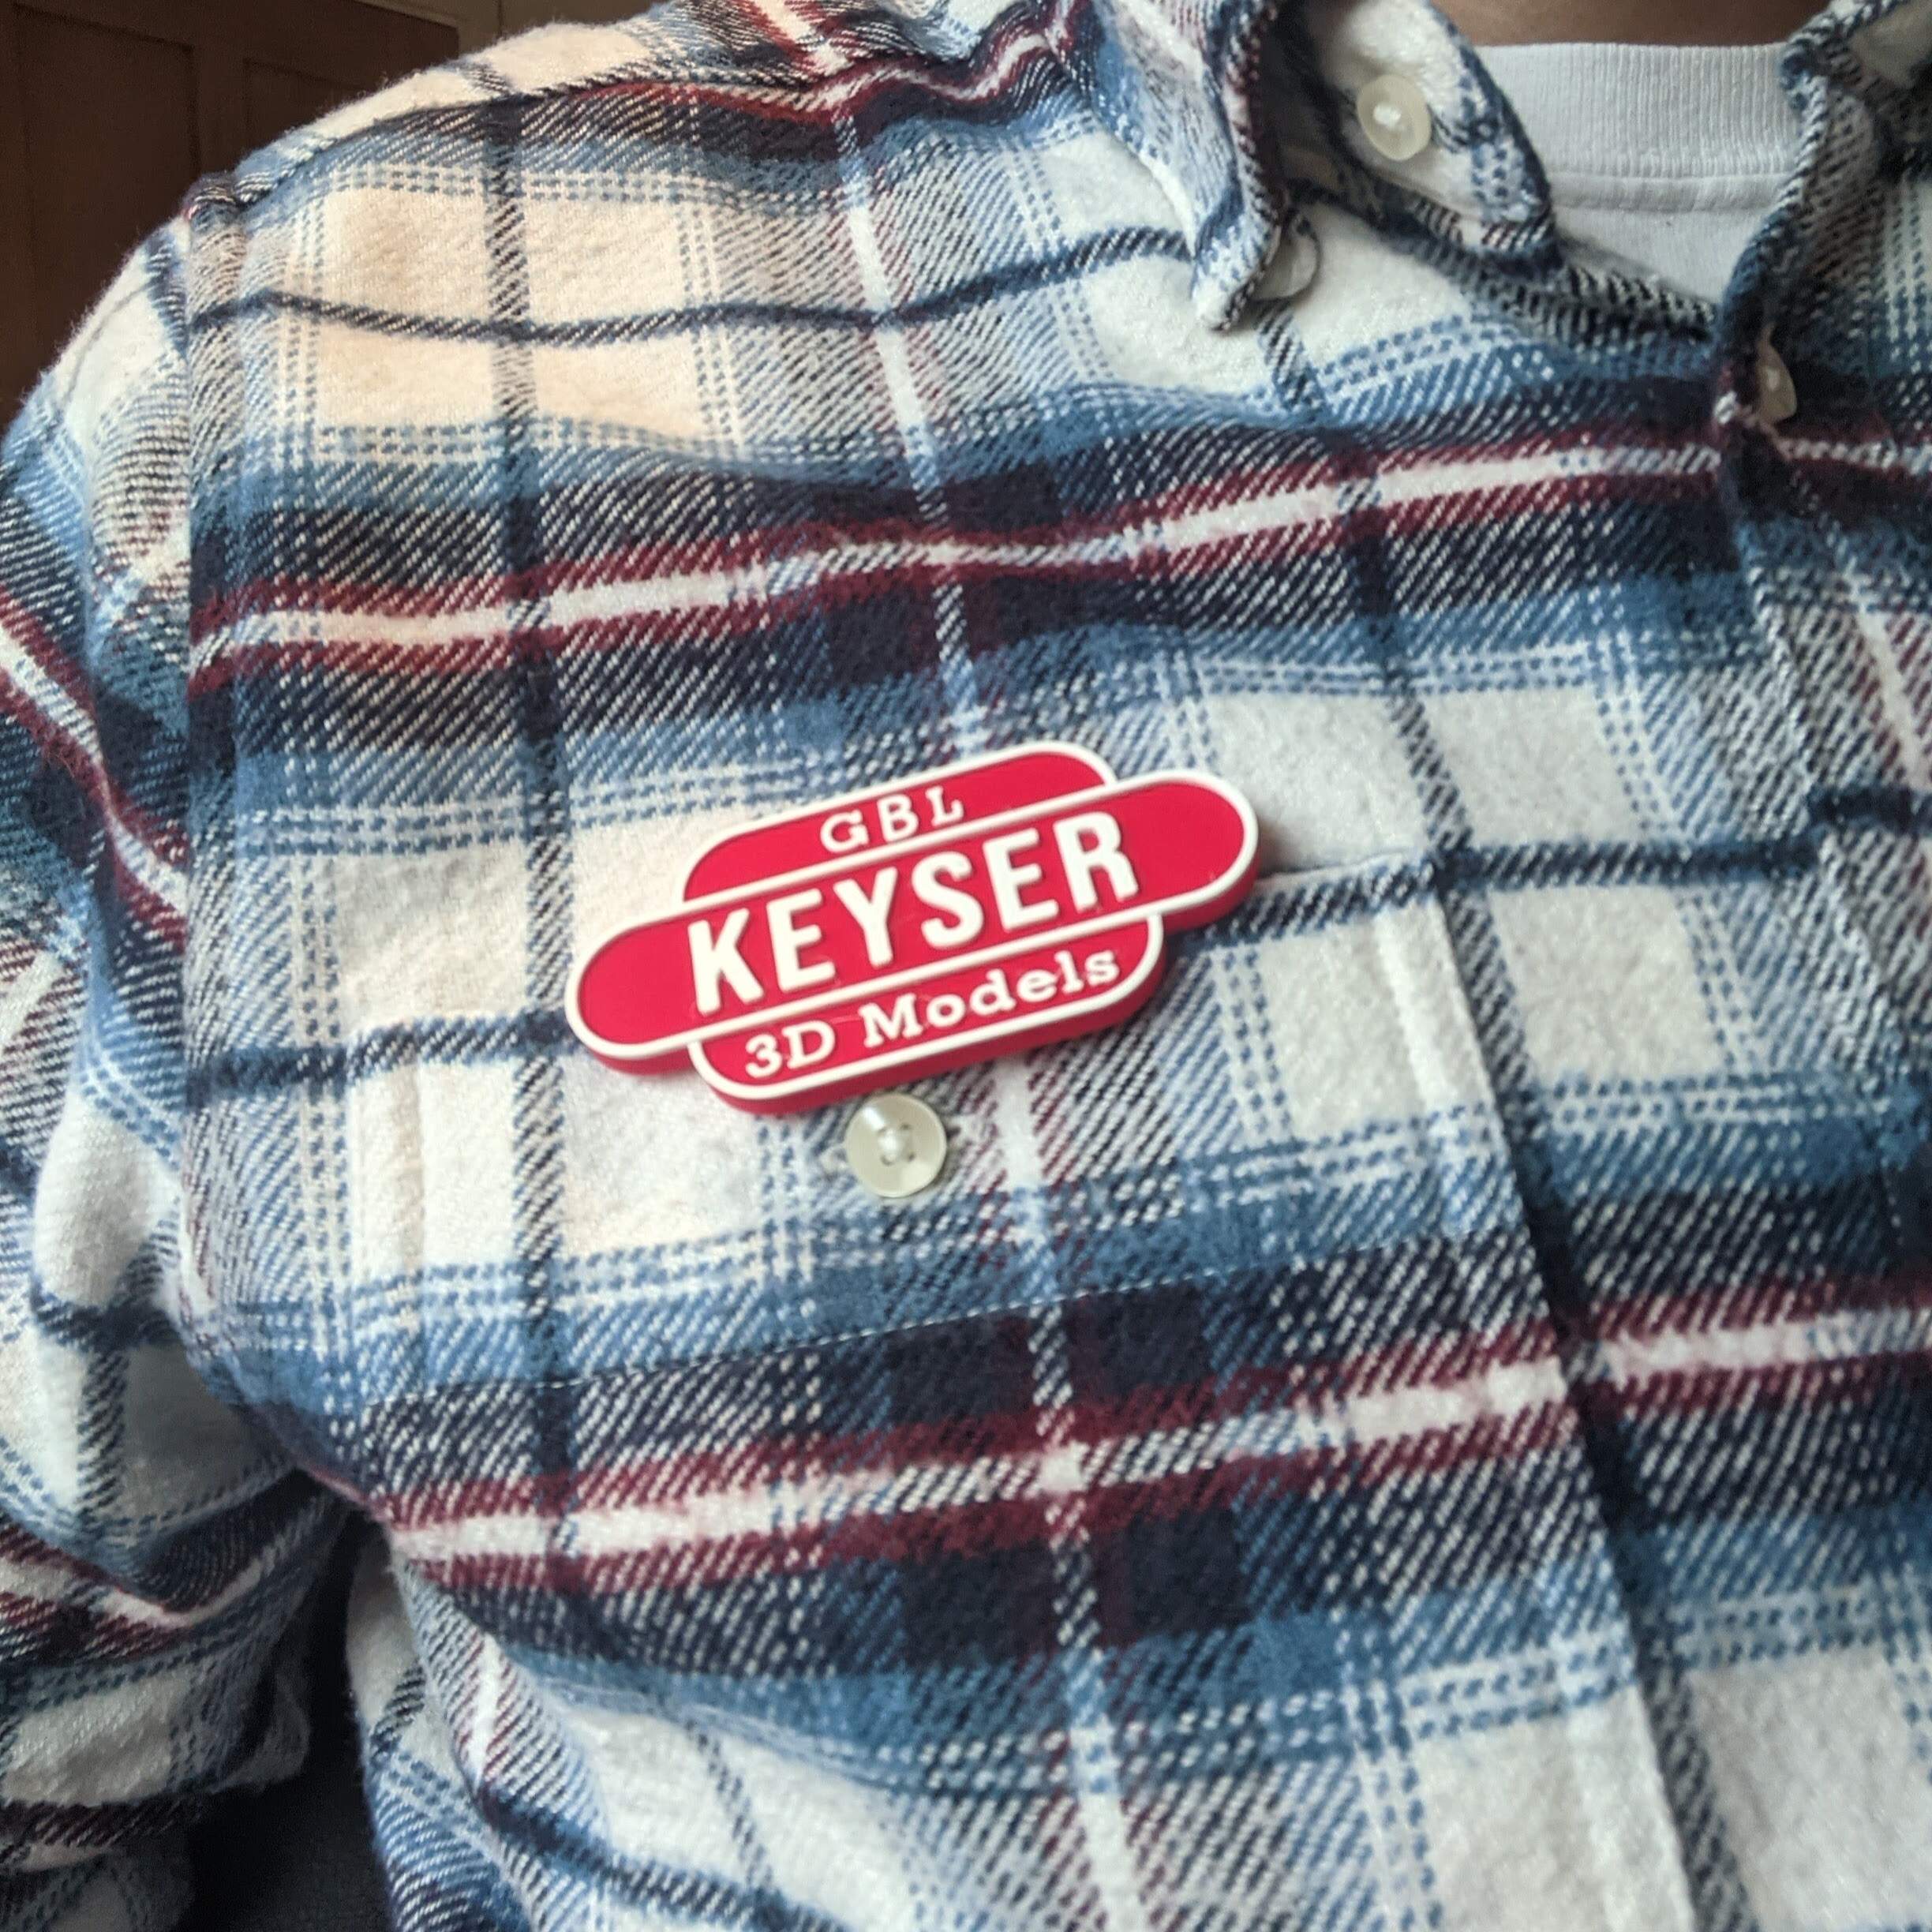 Keyser 3D Models Badge